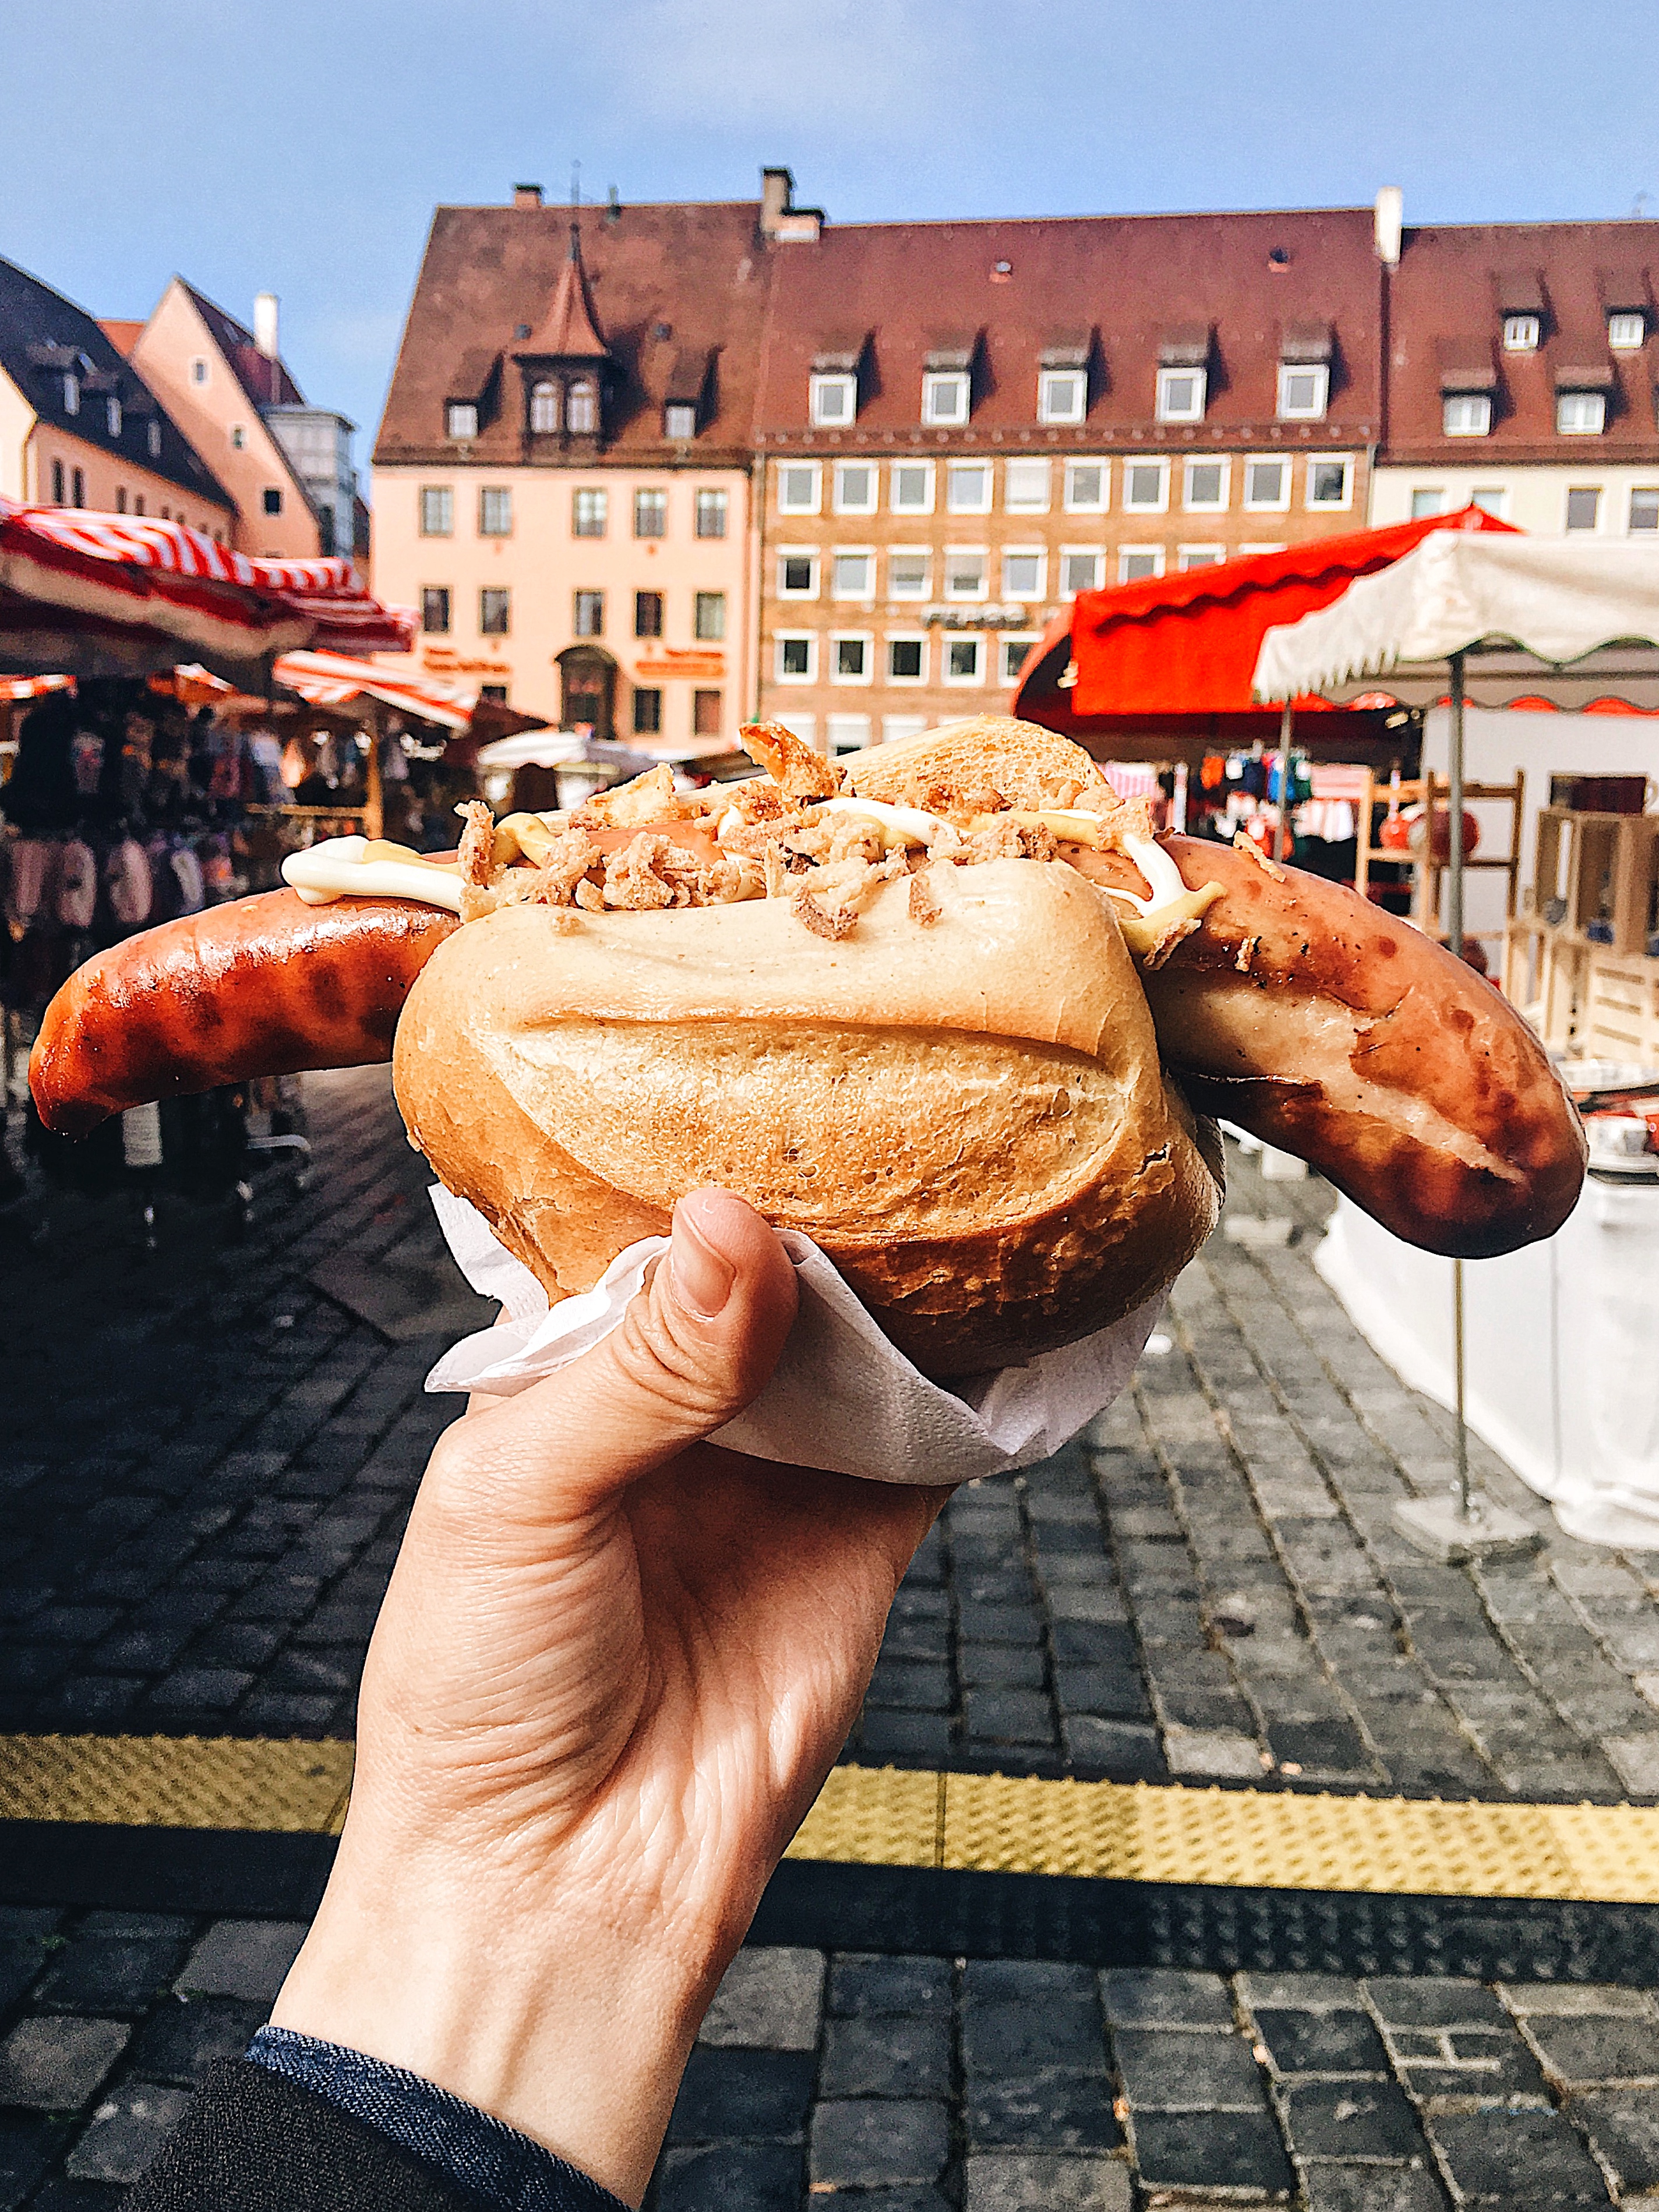 Hot dog in Nuremberg